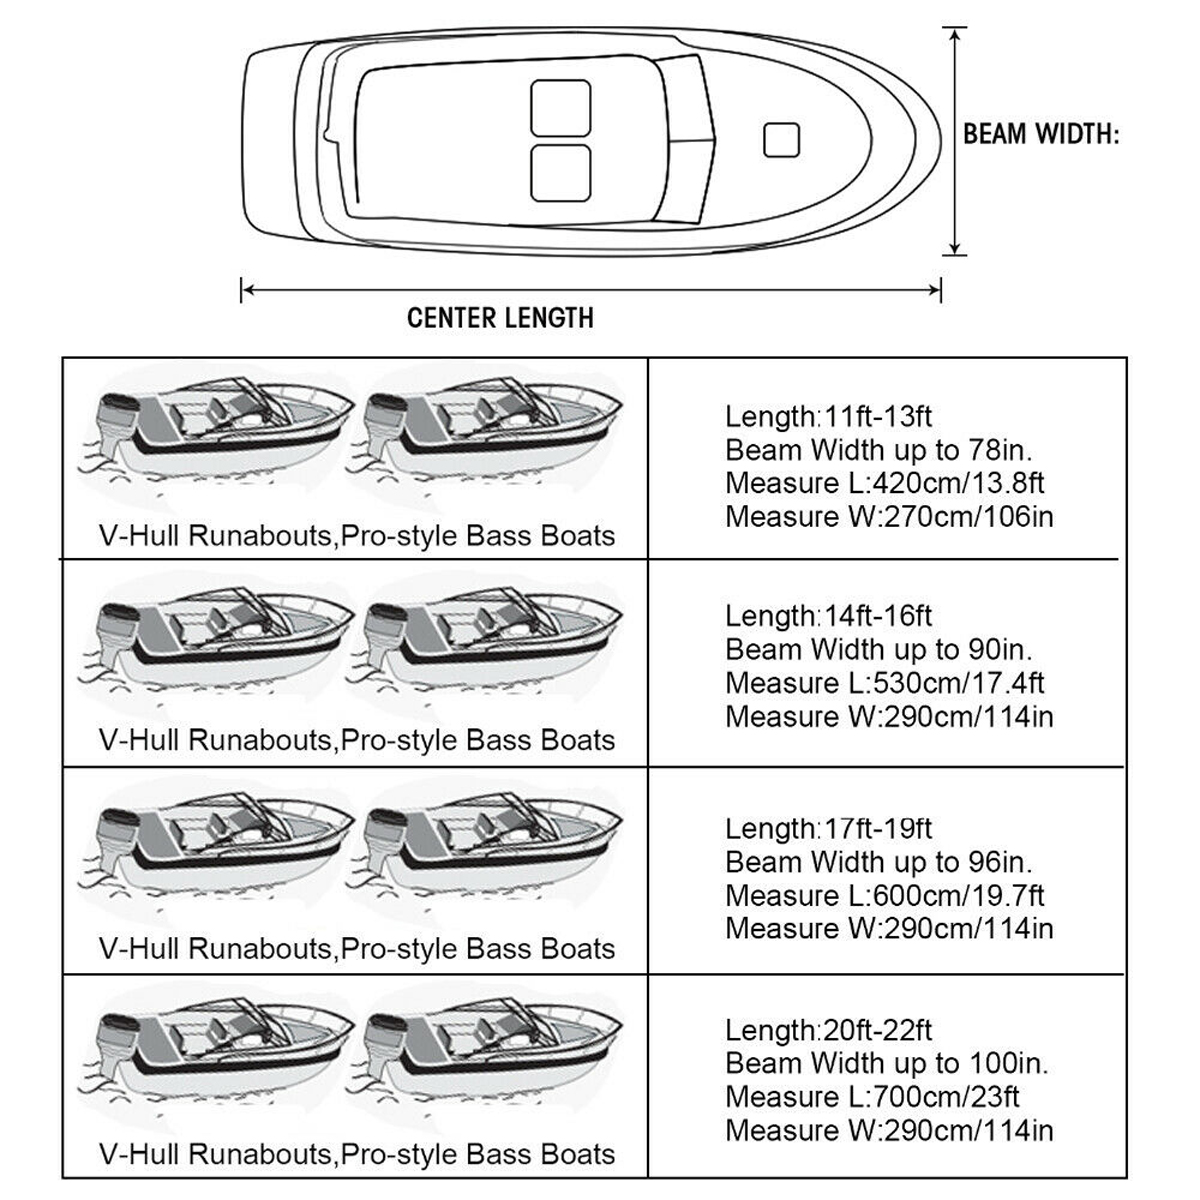 ELuto 11-13ft 14-16ft 17-19ft 20-22ft V-shape Boat Cover Waterproof UV-Protected Heavy Duty 210D Trailerable Canvas Black